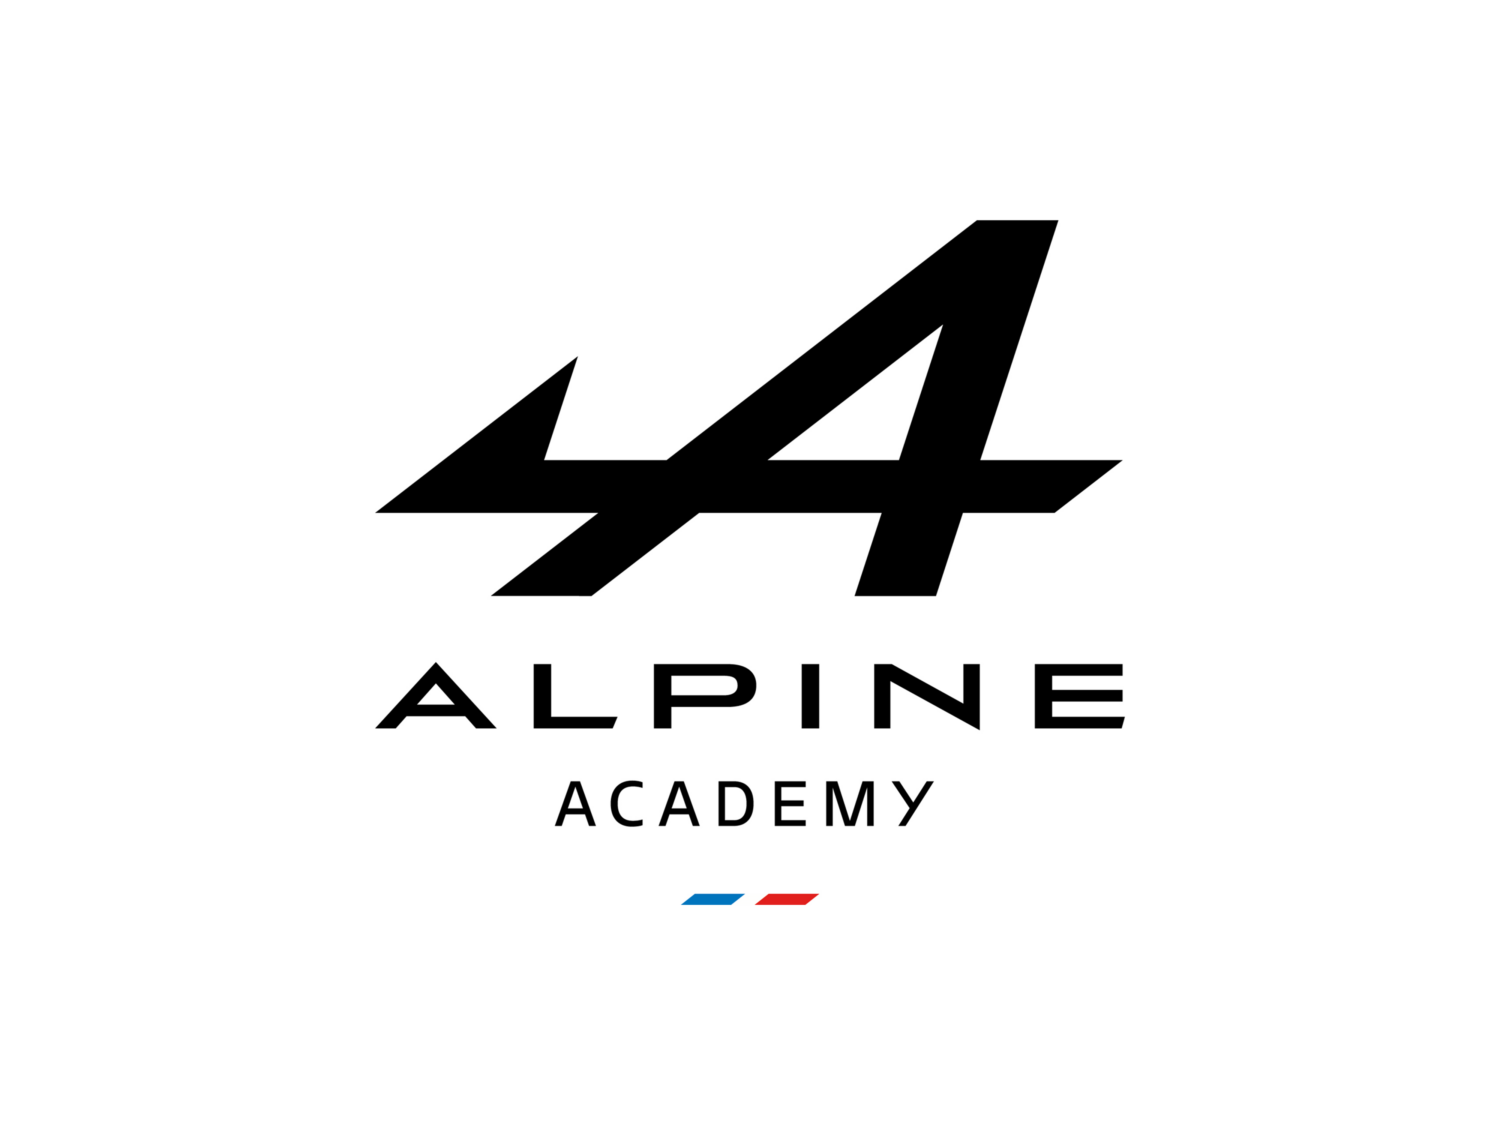 Alpine Academy - logo.png